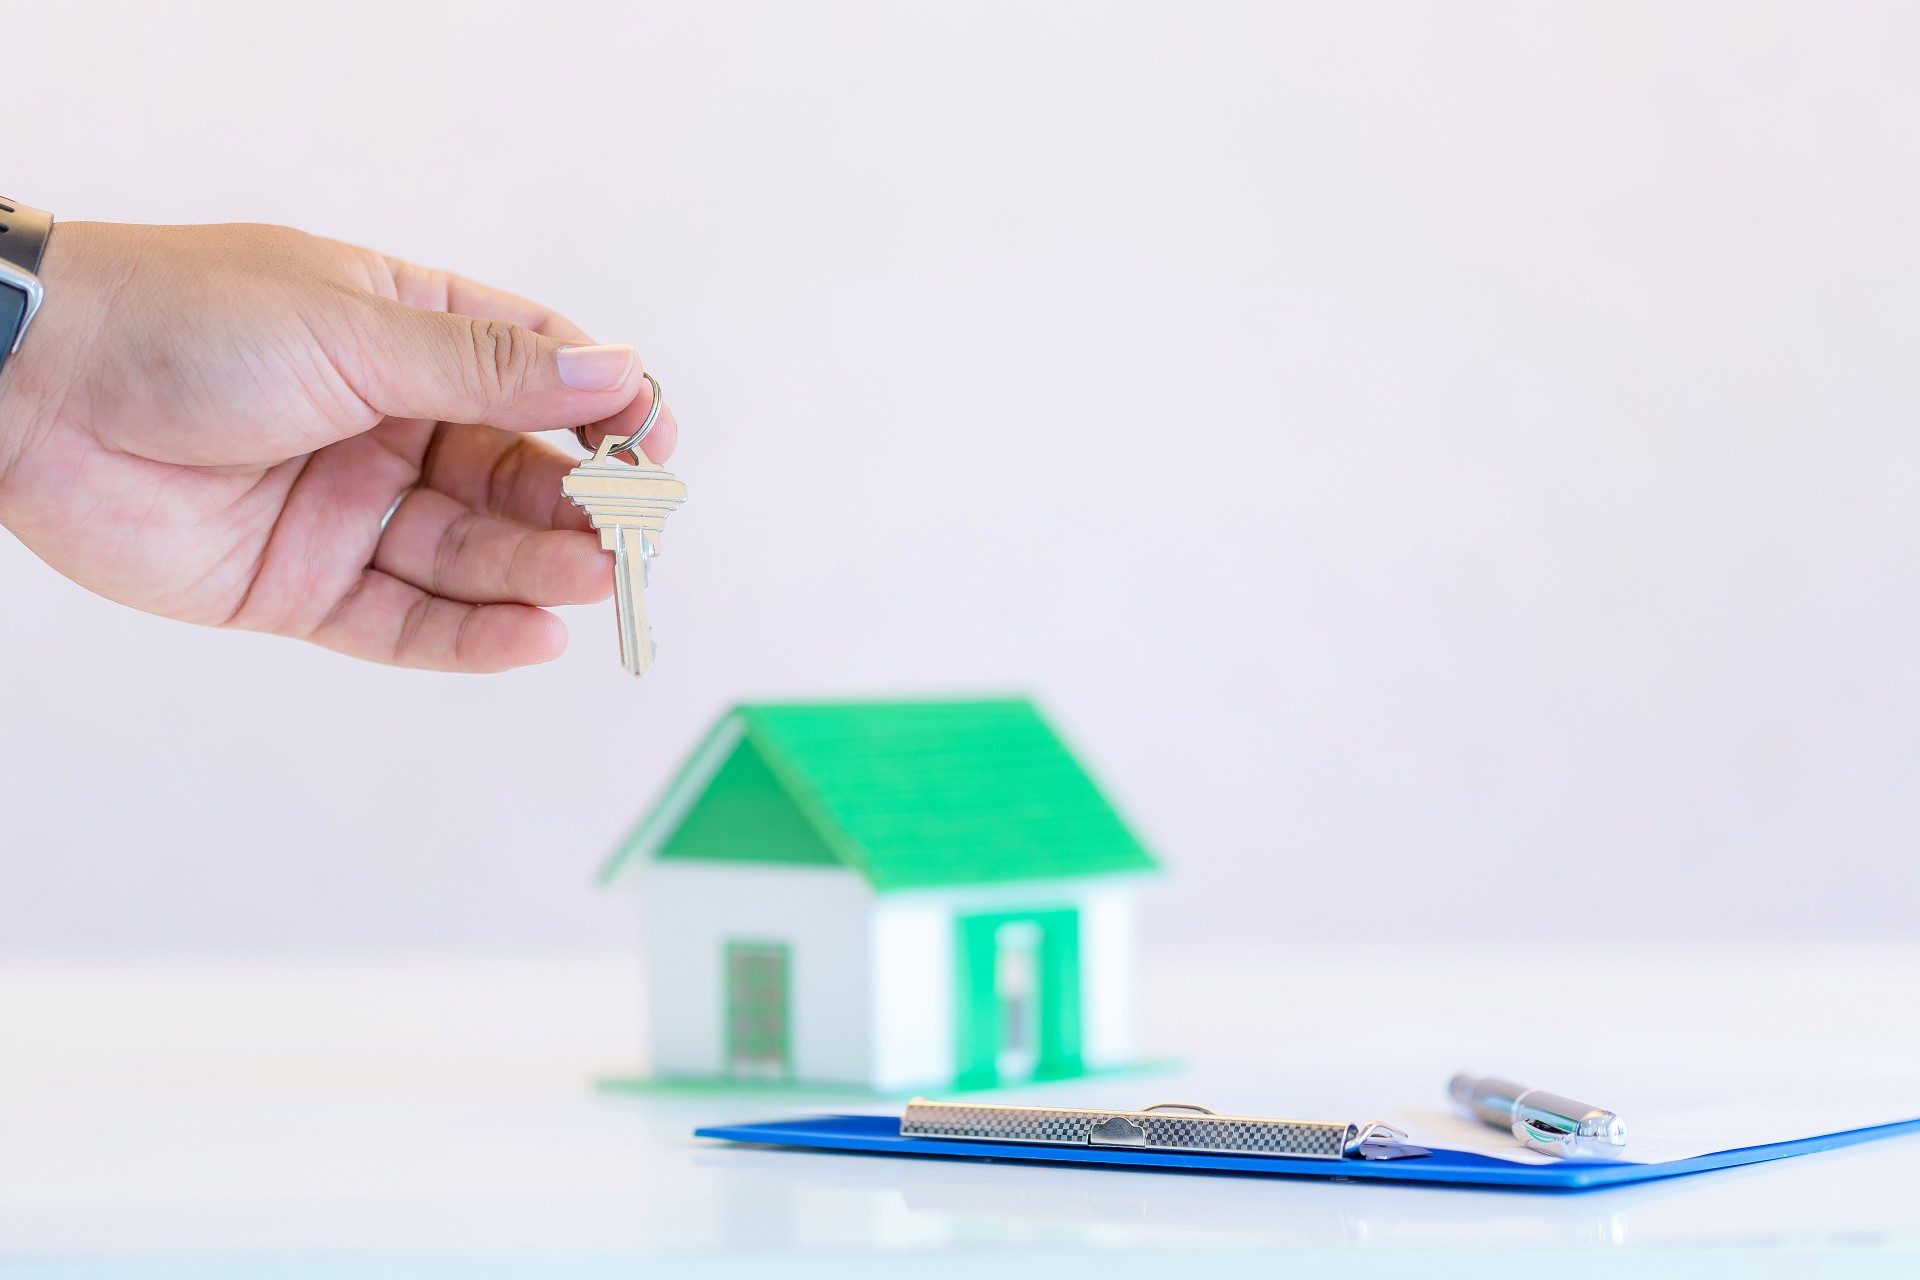 Branie kredytu hipotecznego na dom